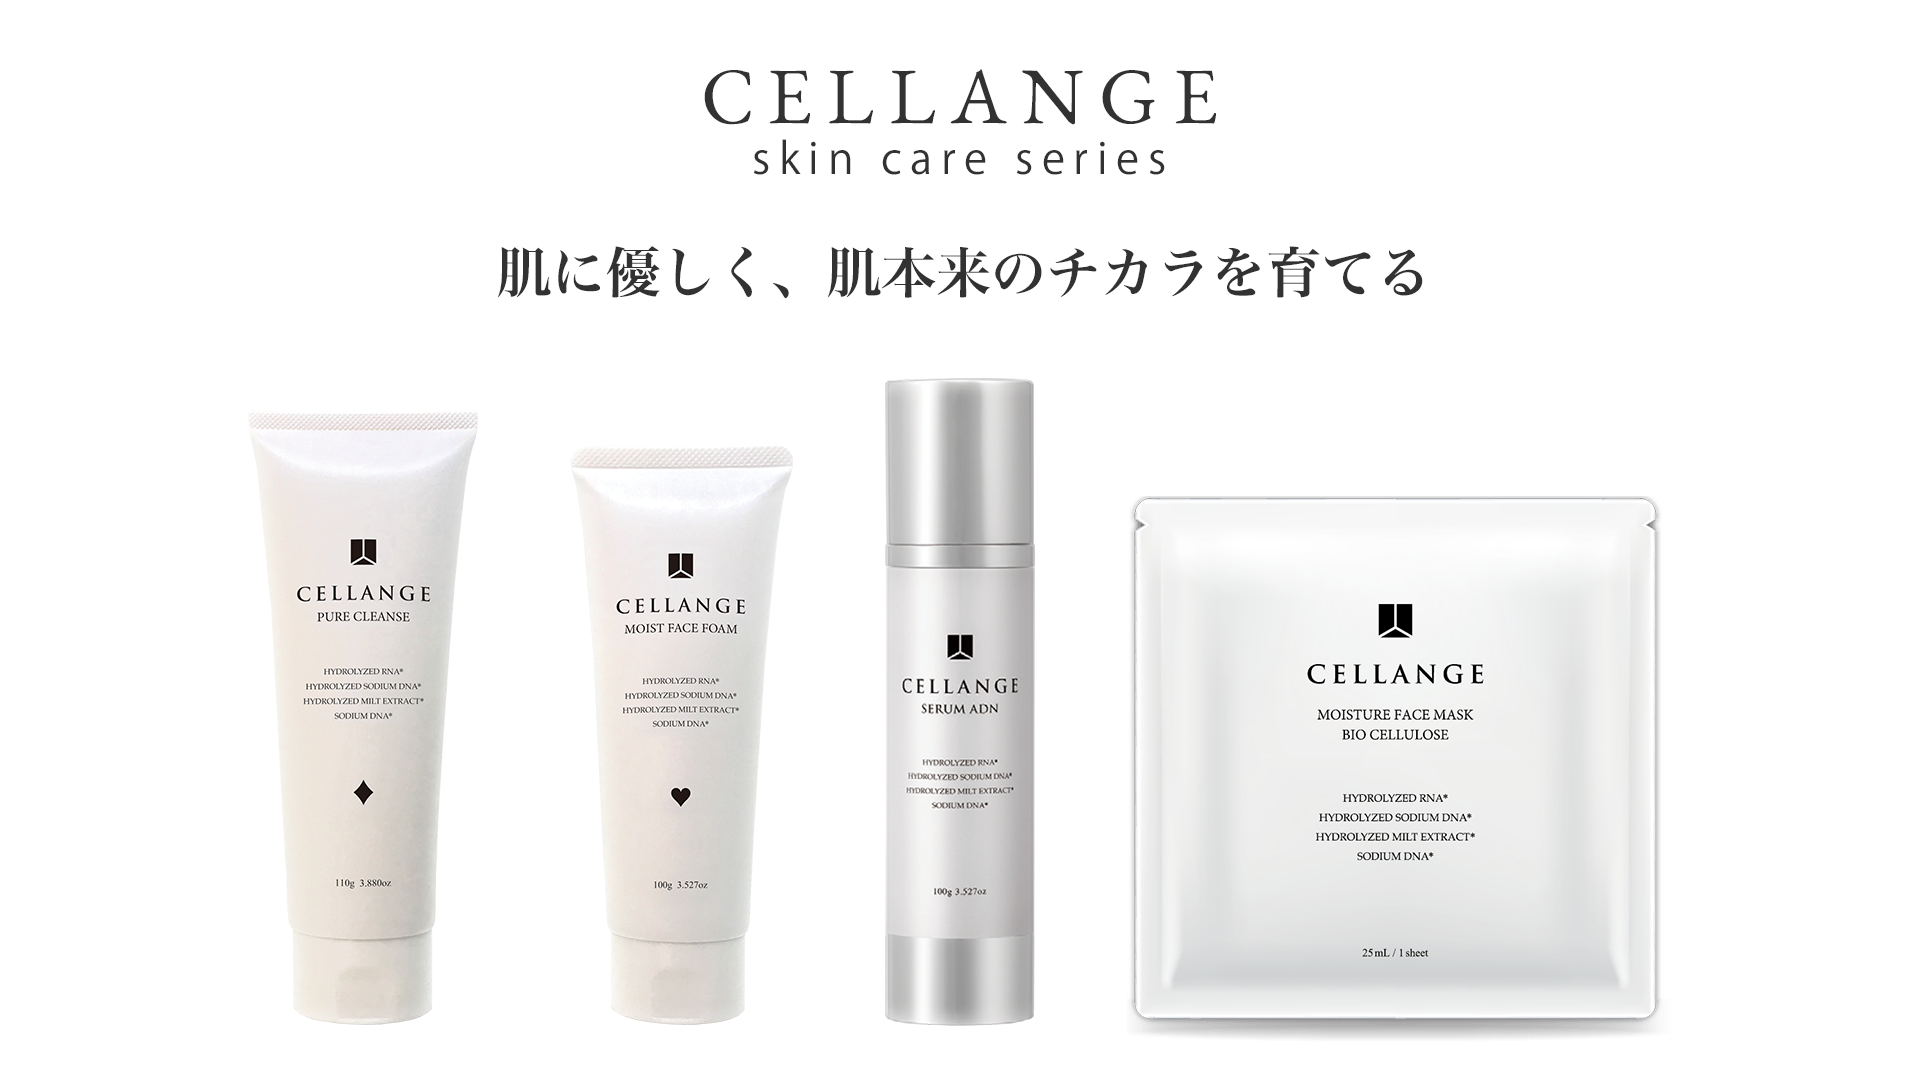 CELLANGE Skincare series